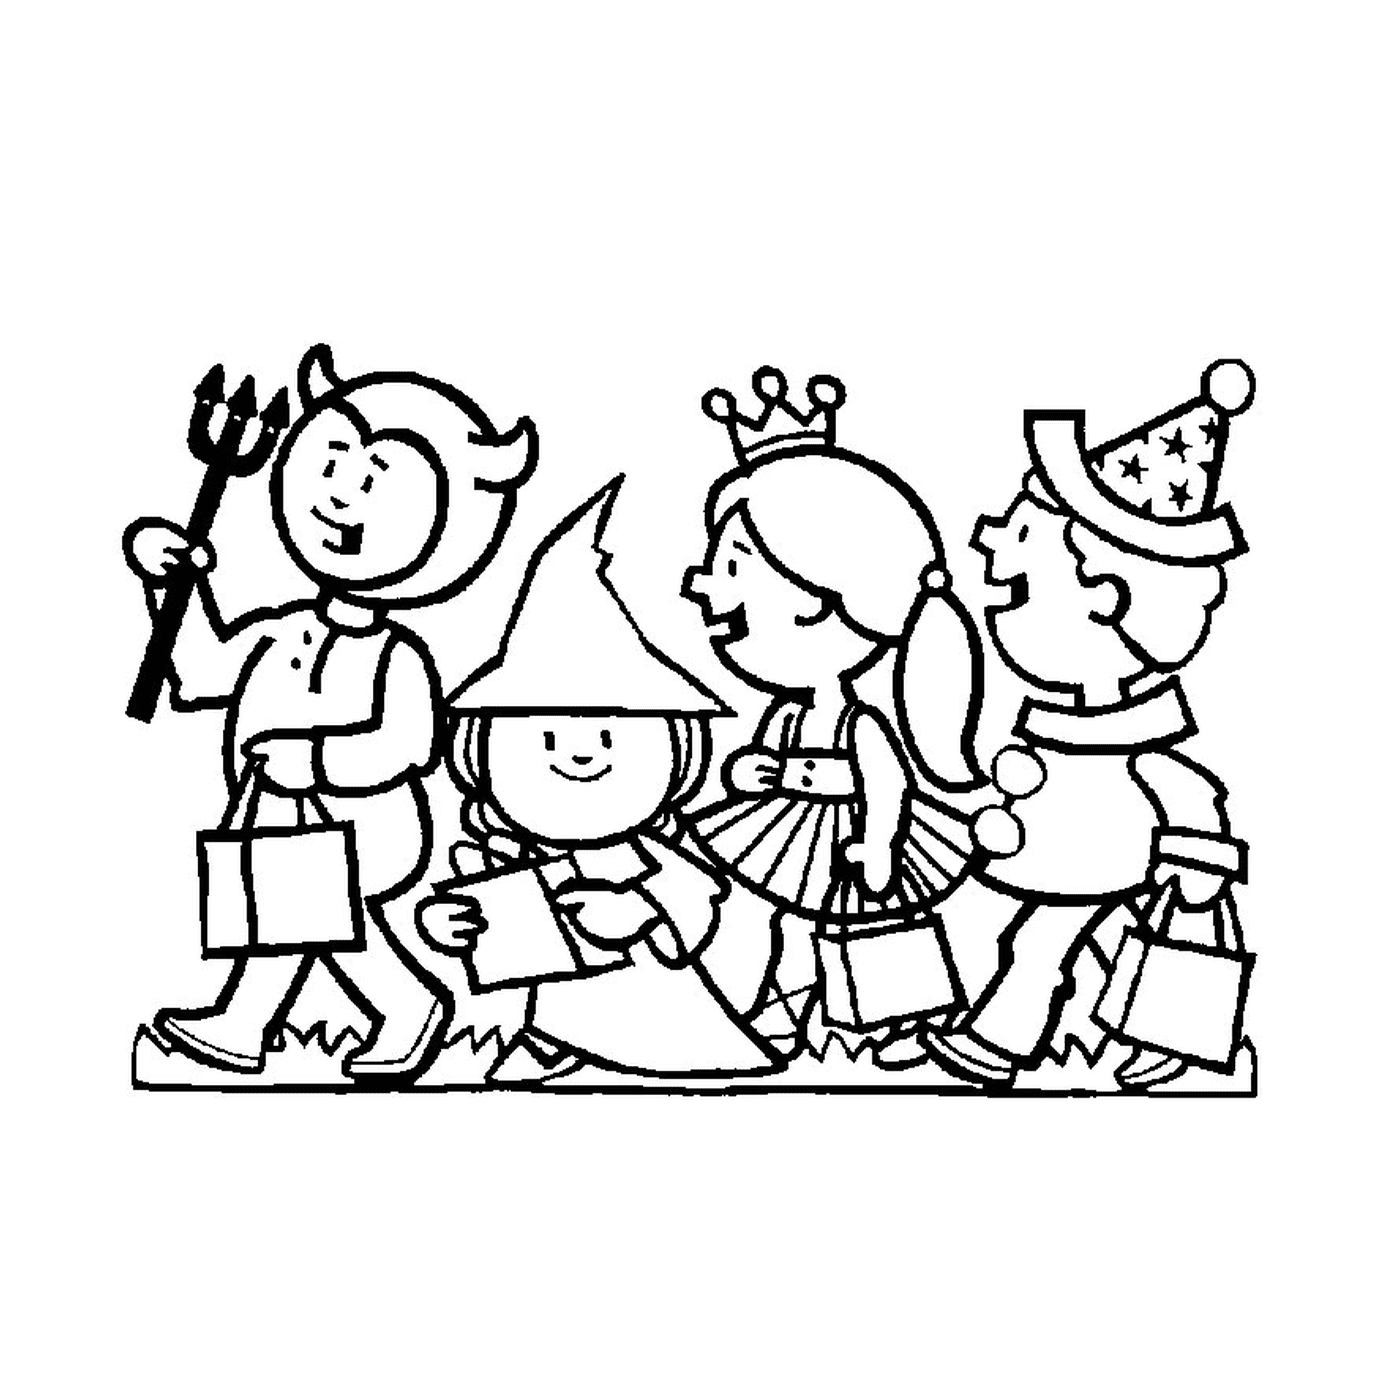  Group of costumed children 